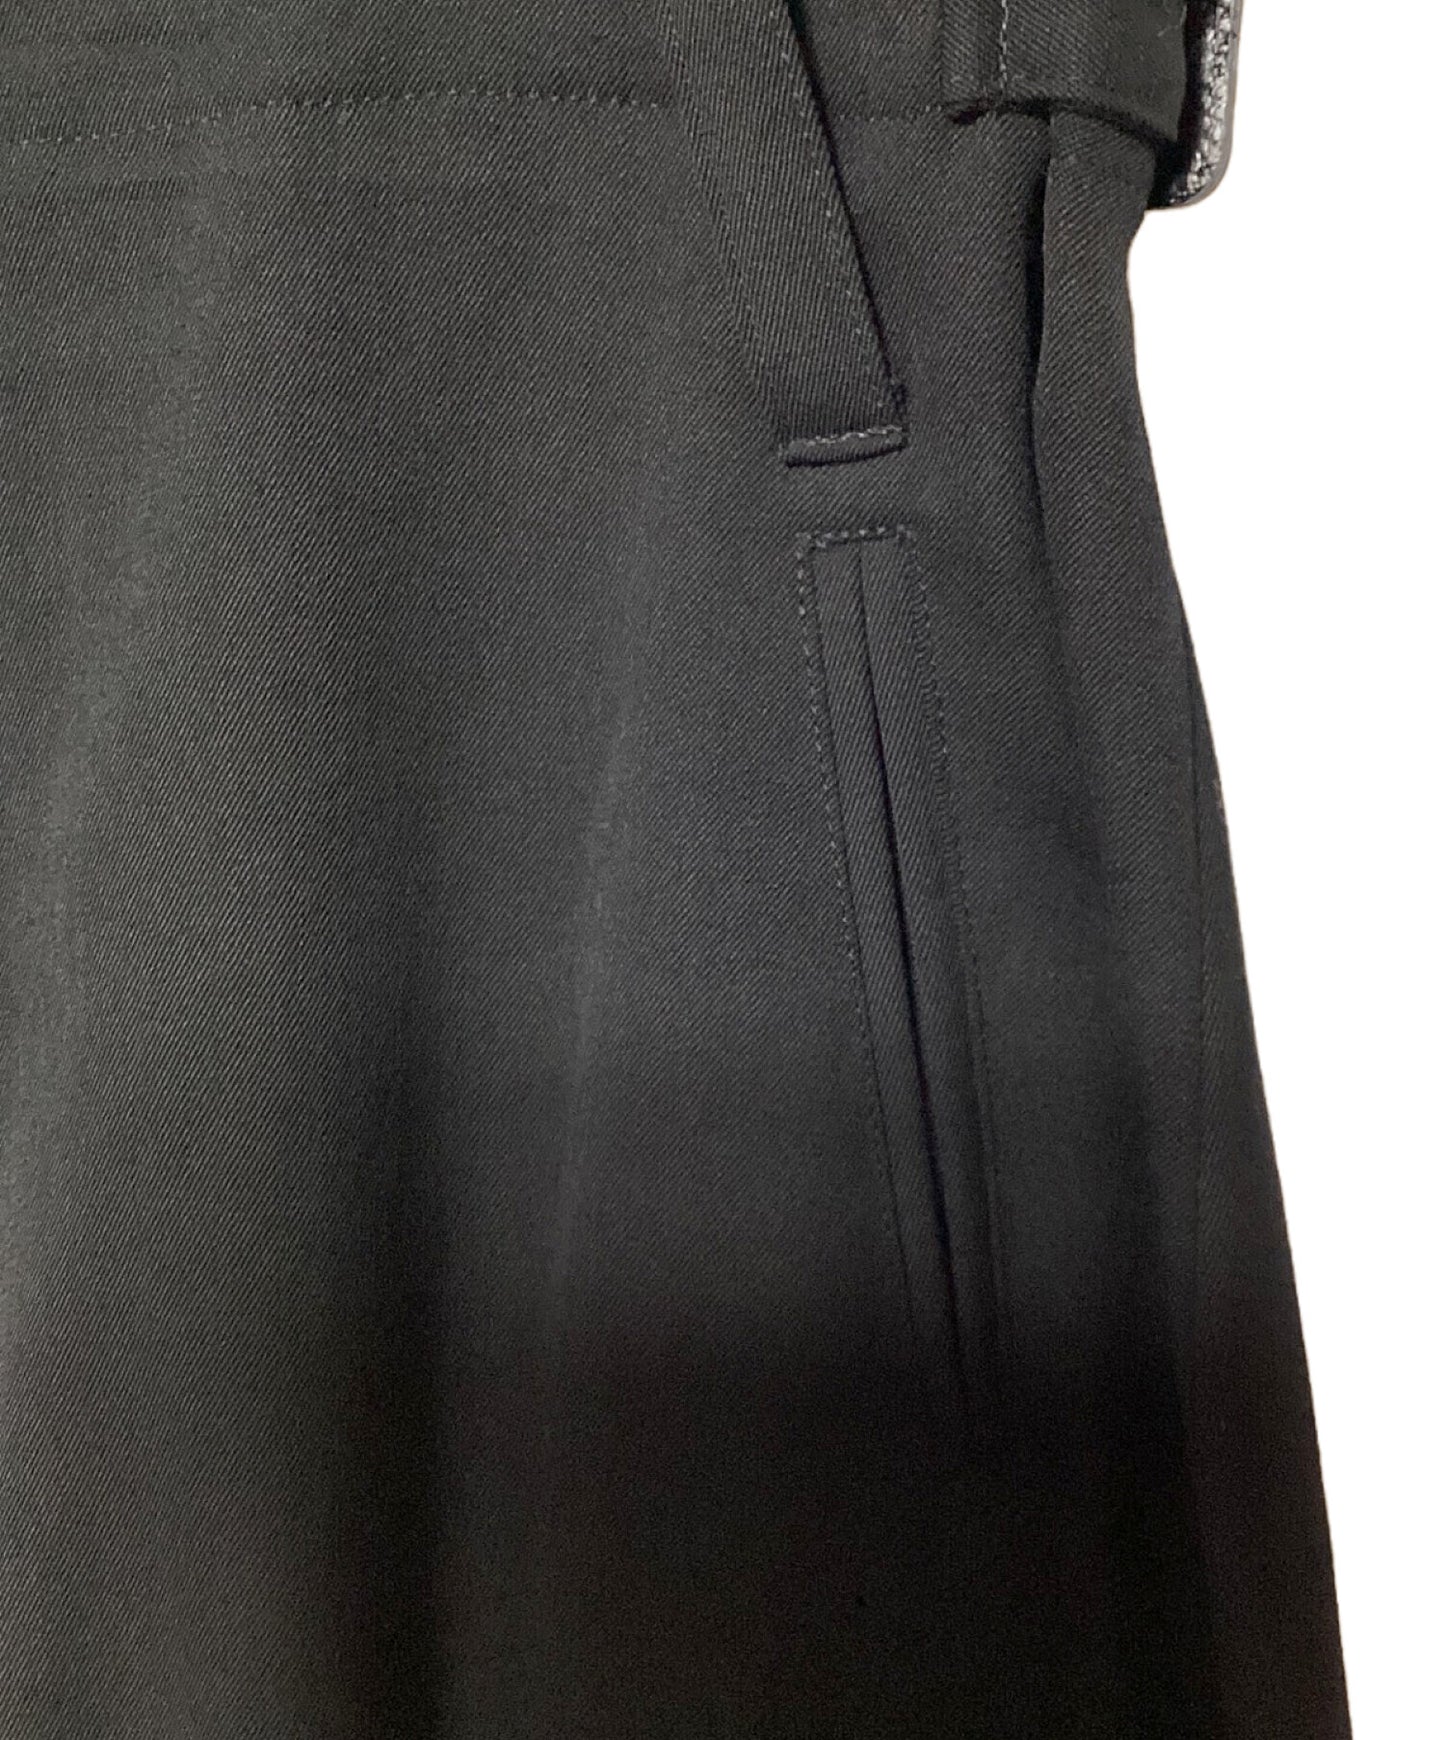 [Pre-owned] Jean Paul GAULTIER CLASSIQUE skirt